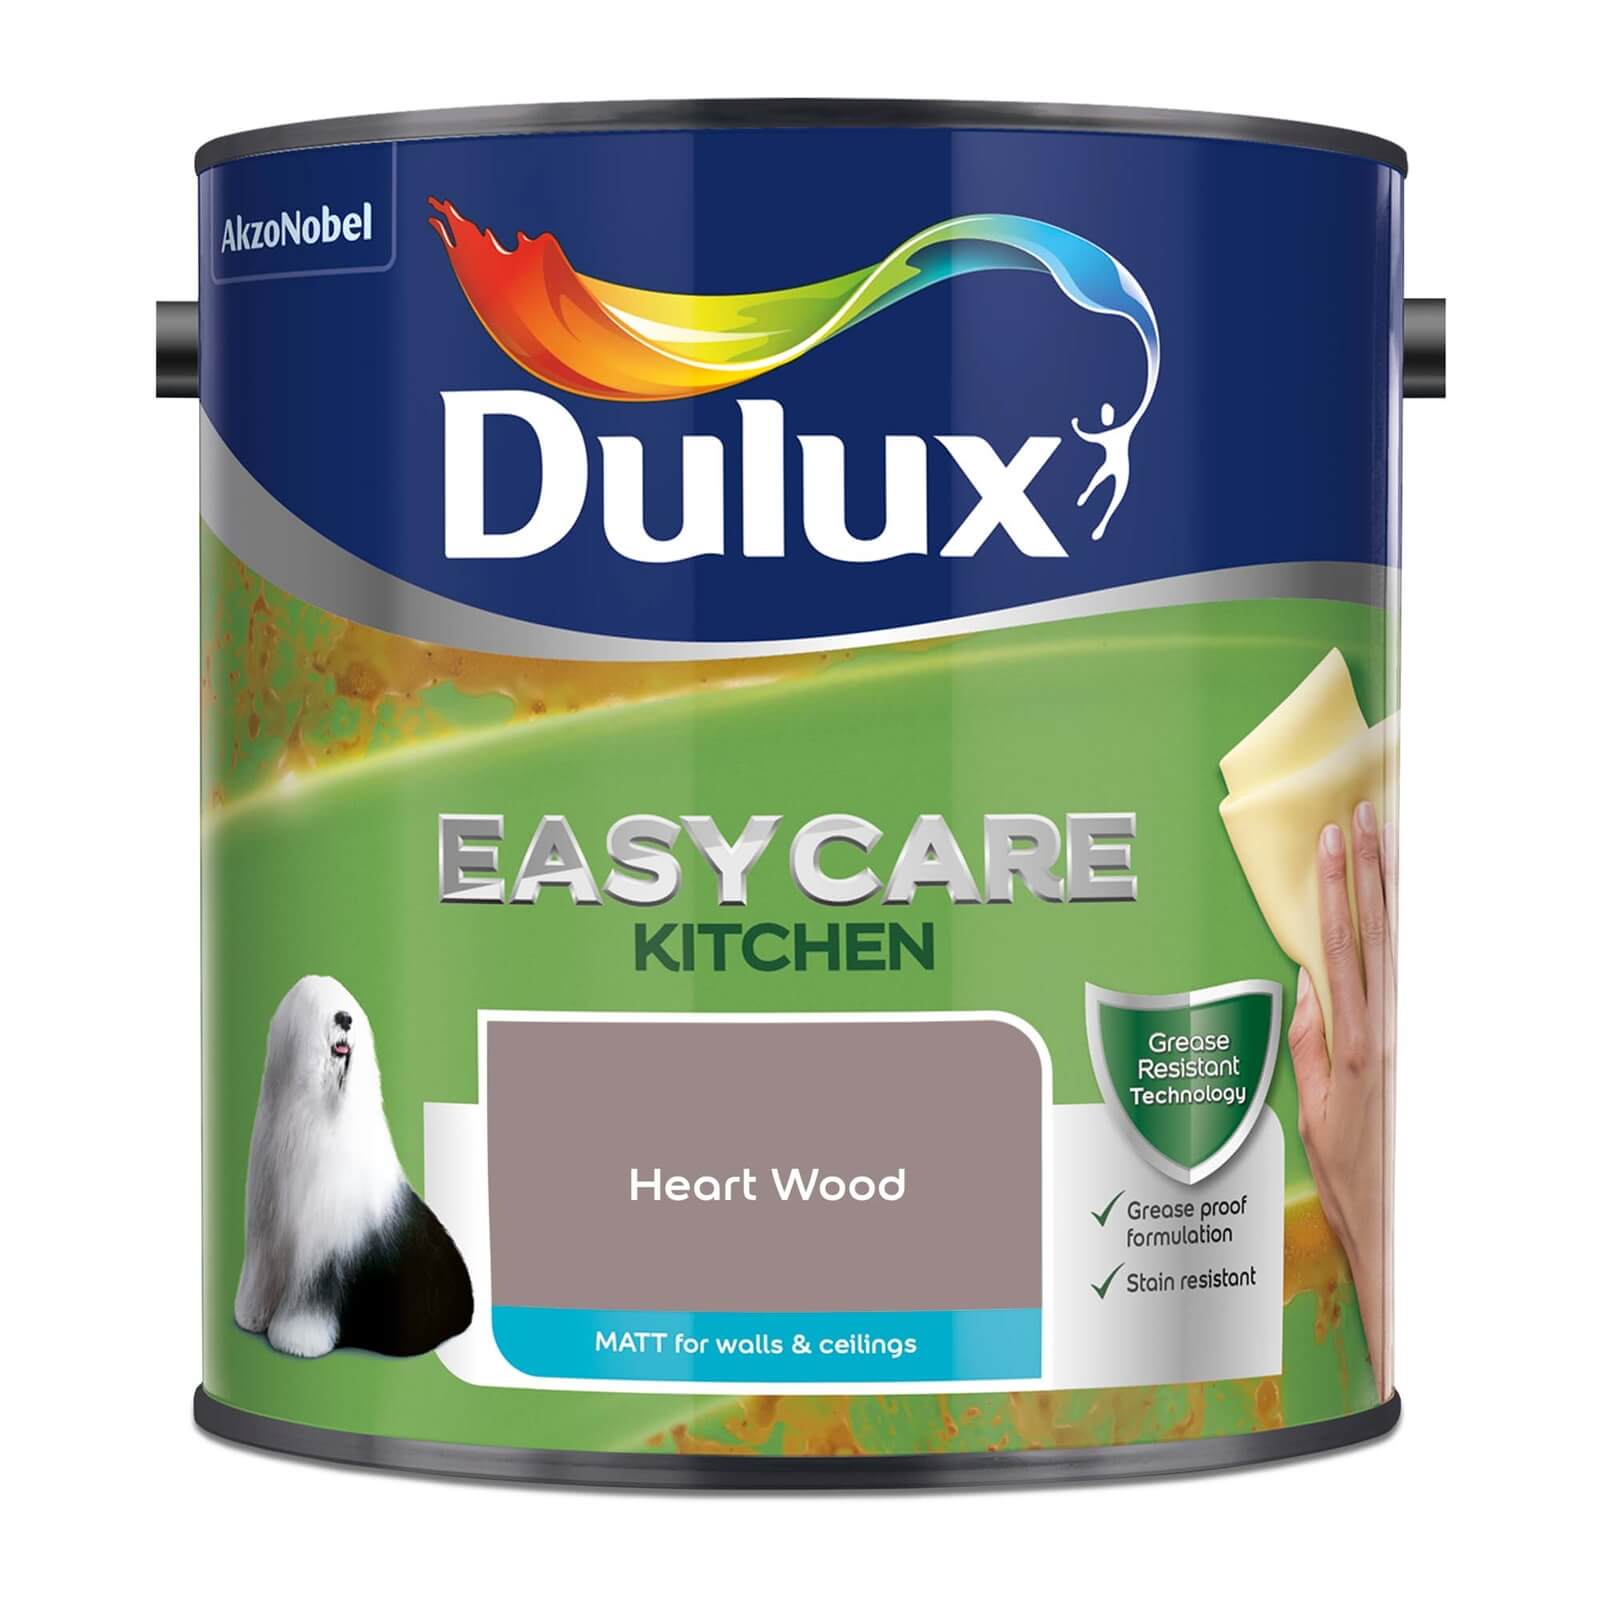 Dulux Easycare Kitchen Heart Wood Matt Paint - 2.5L